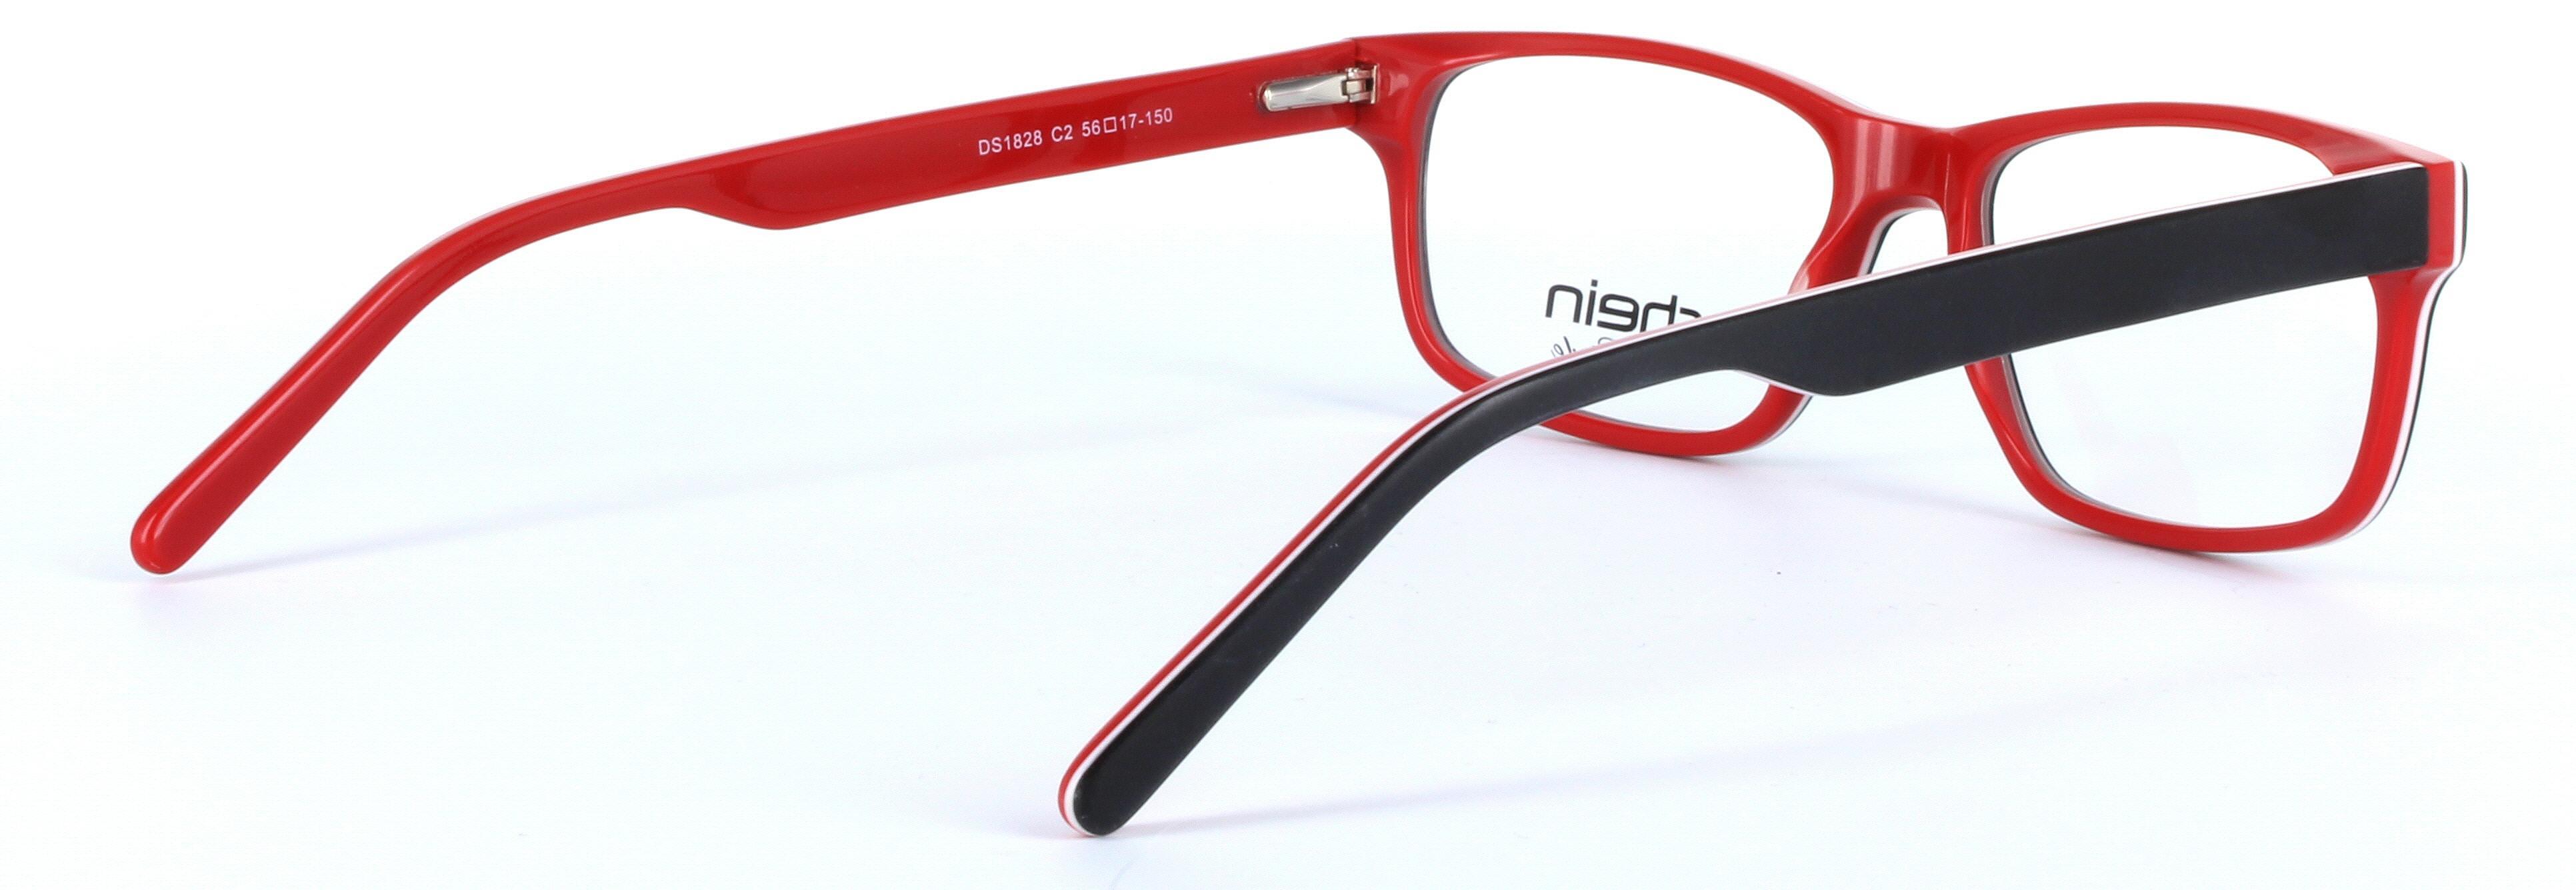 Carson Black and Red Full Rim Oval Rectangular Plastic Glasses - Image View 4